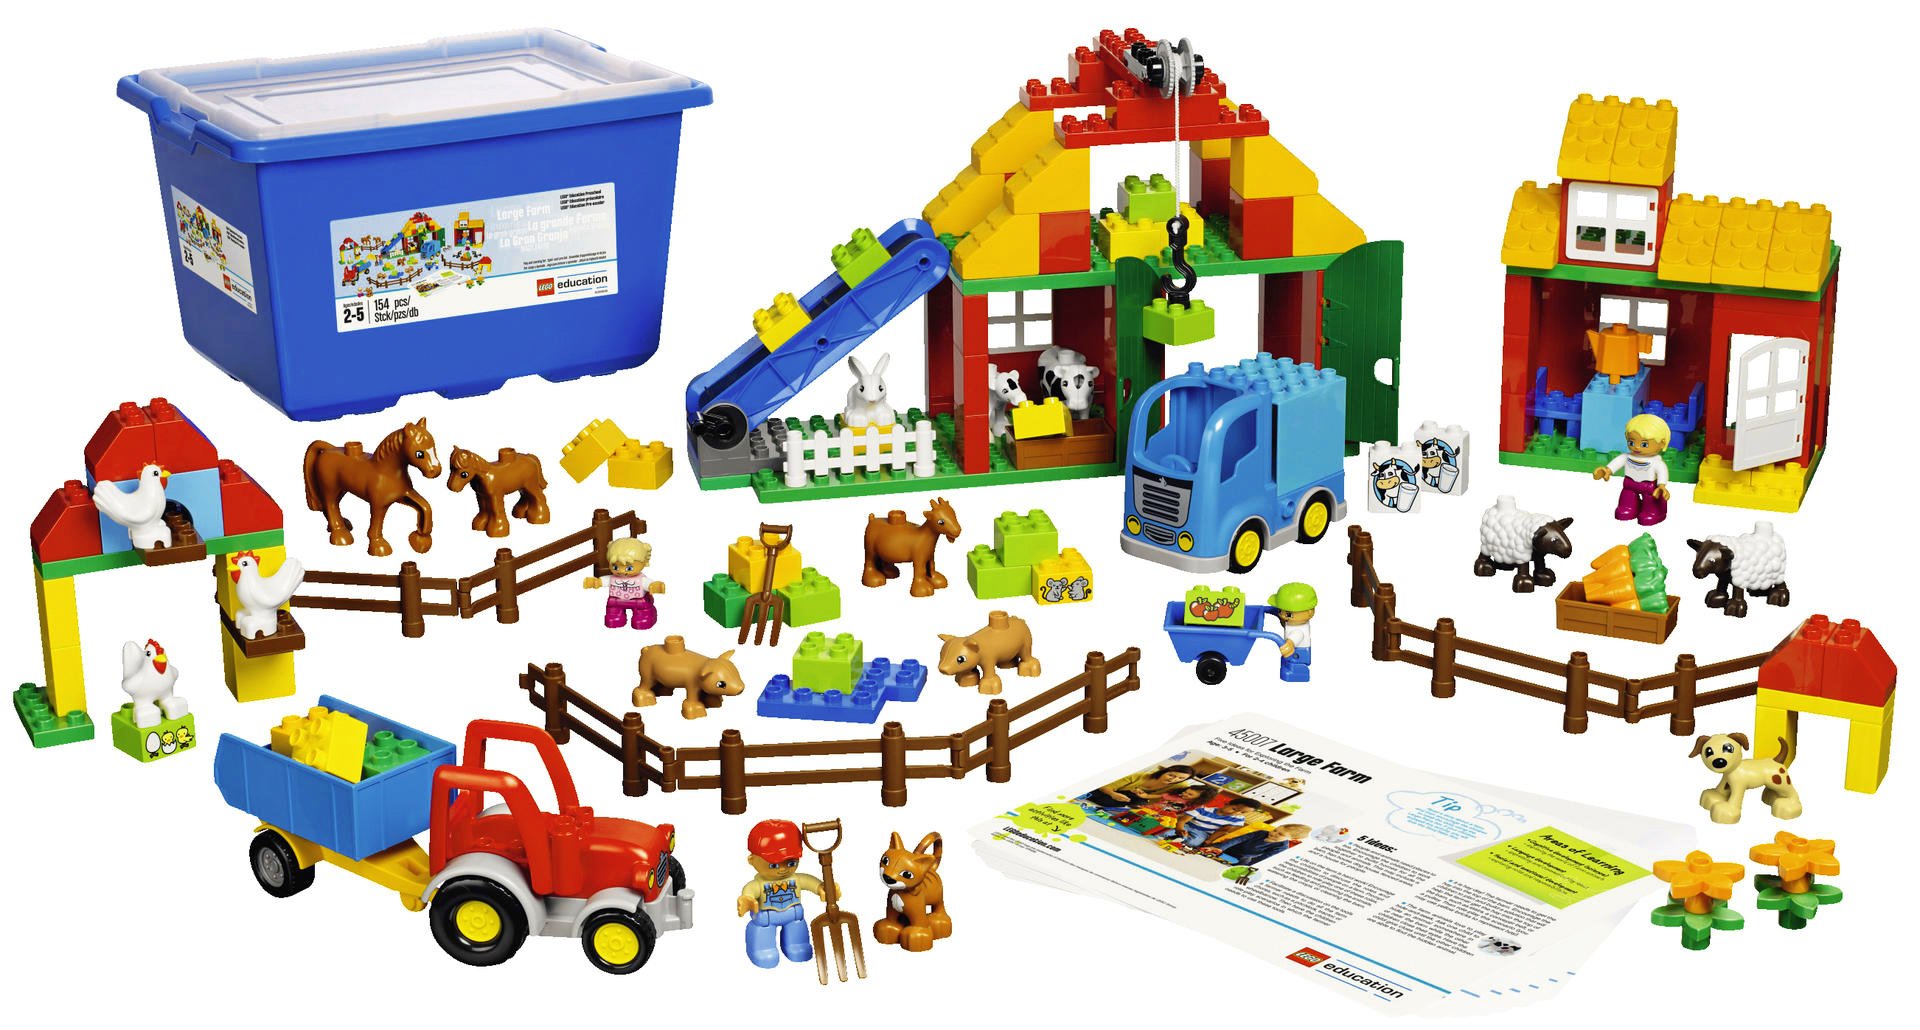 LEGO レゴ デュプロ たのしい農場セット 45007 国内正規品 V95-5287